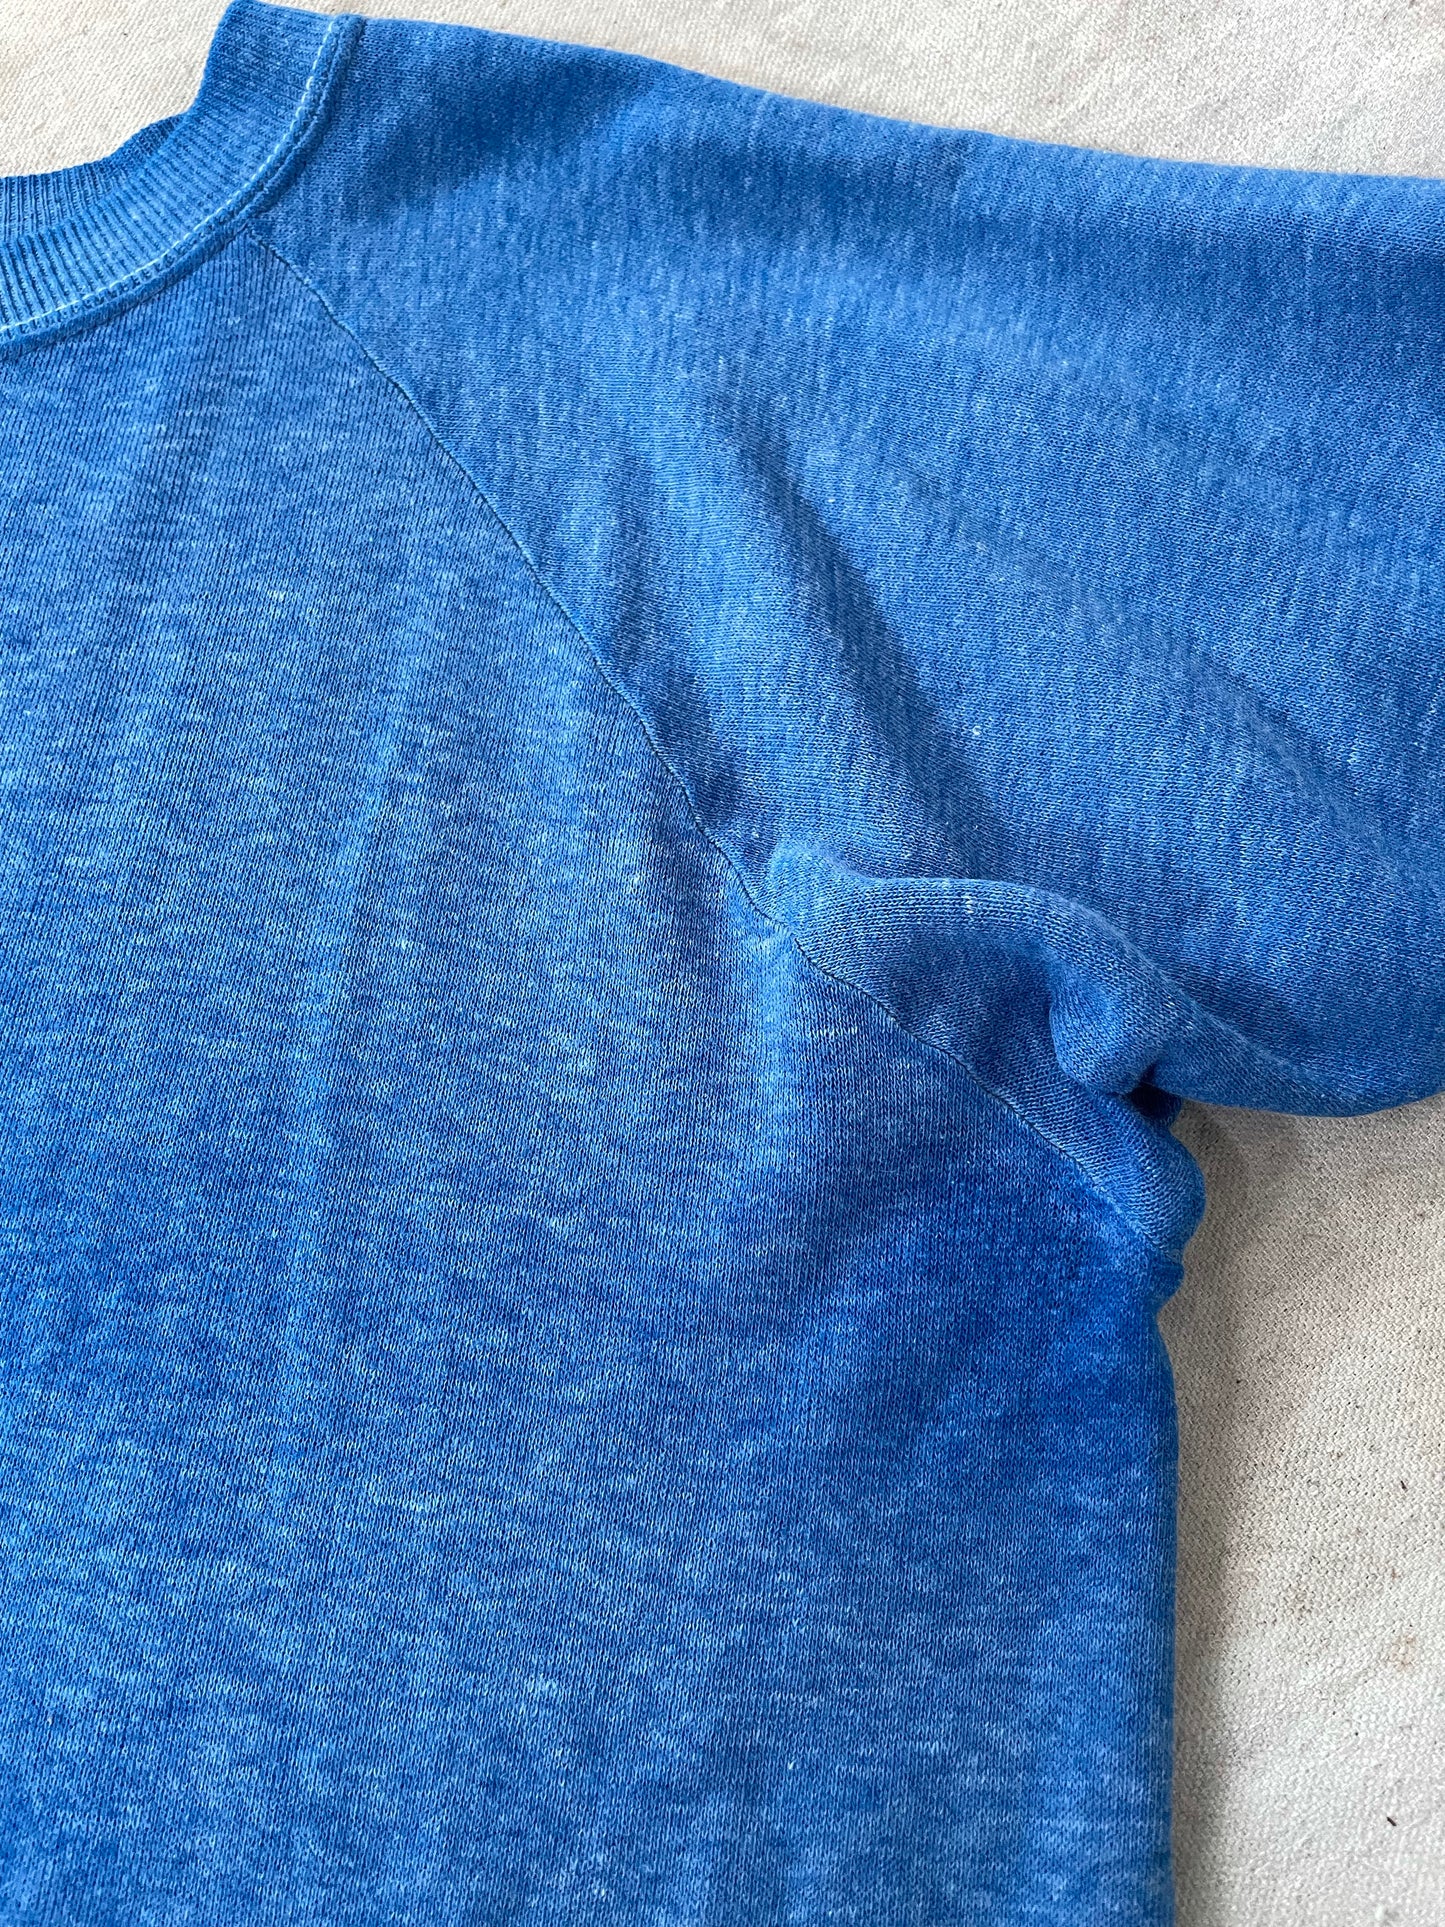 Azure Blue Short Sleeve Sweatshirt